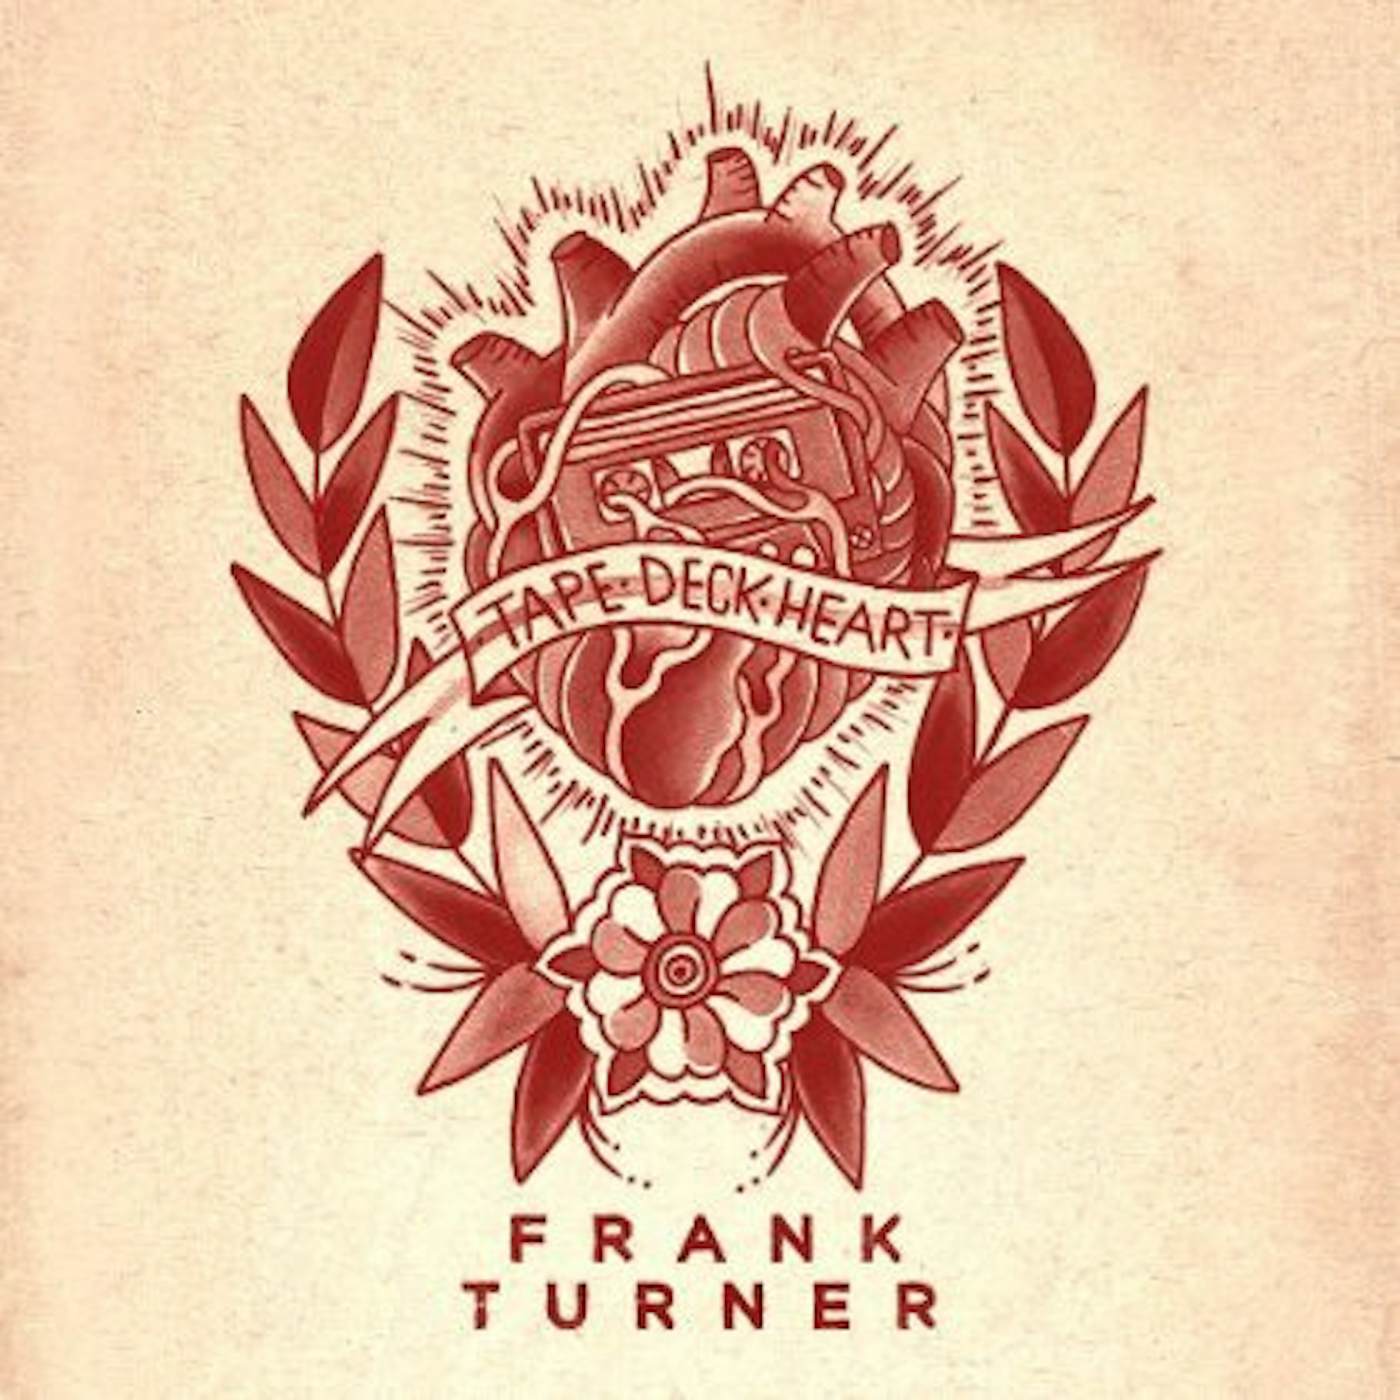 Frank Turner Tape Deck Heart Vinyl Record